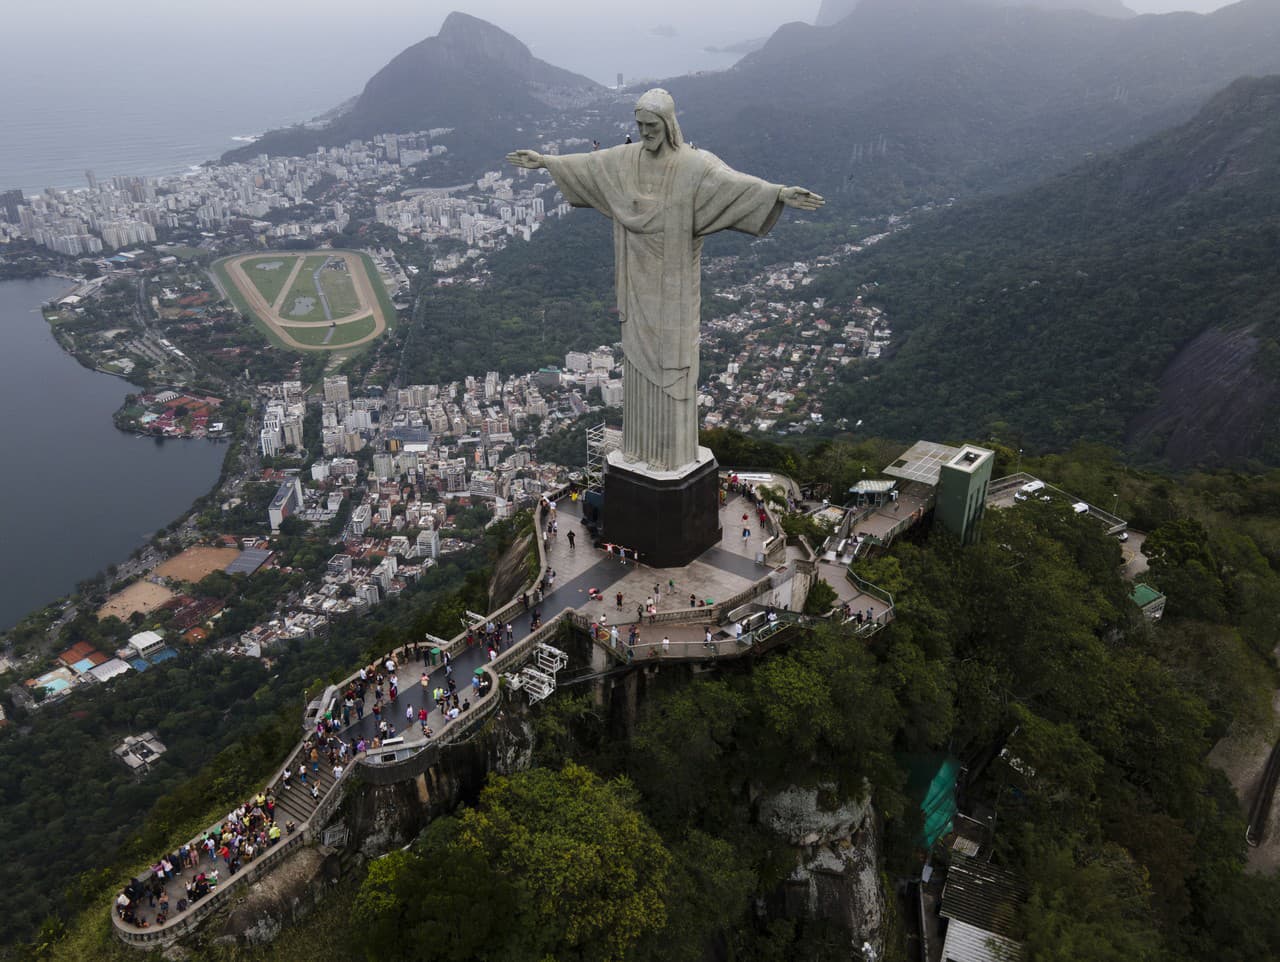 Socha Krista Spasiteľa nad mestom Rio de Janeiro